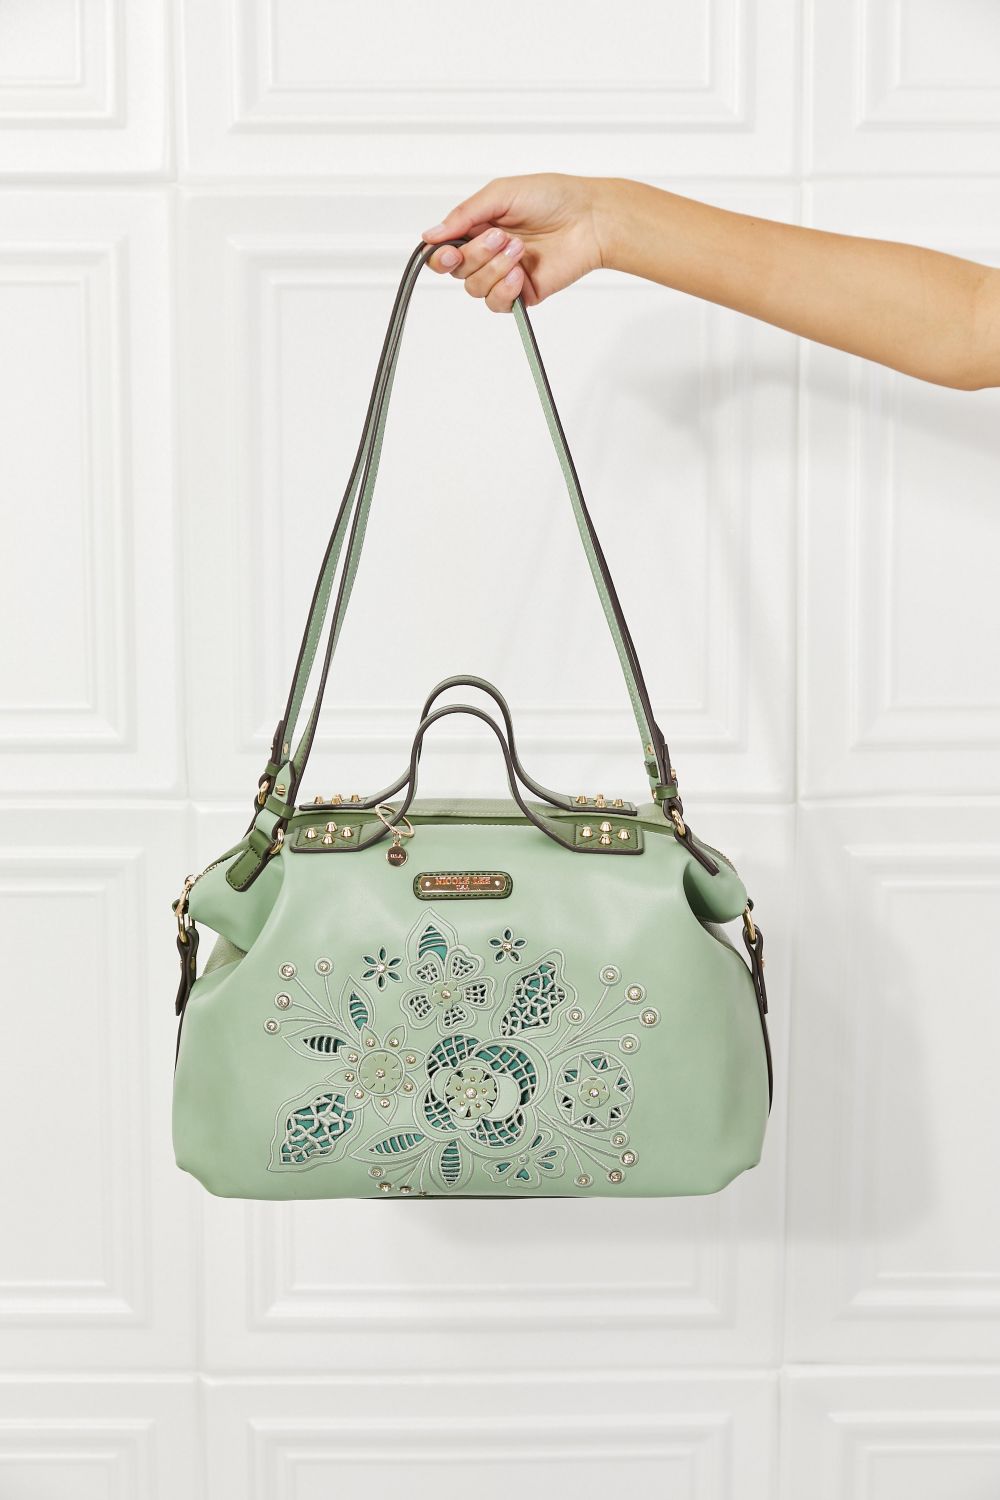 Nicole Lee USA Evolve Handbag - Cheeky Chic Boutique